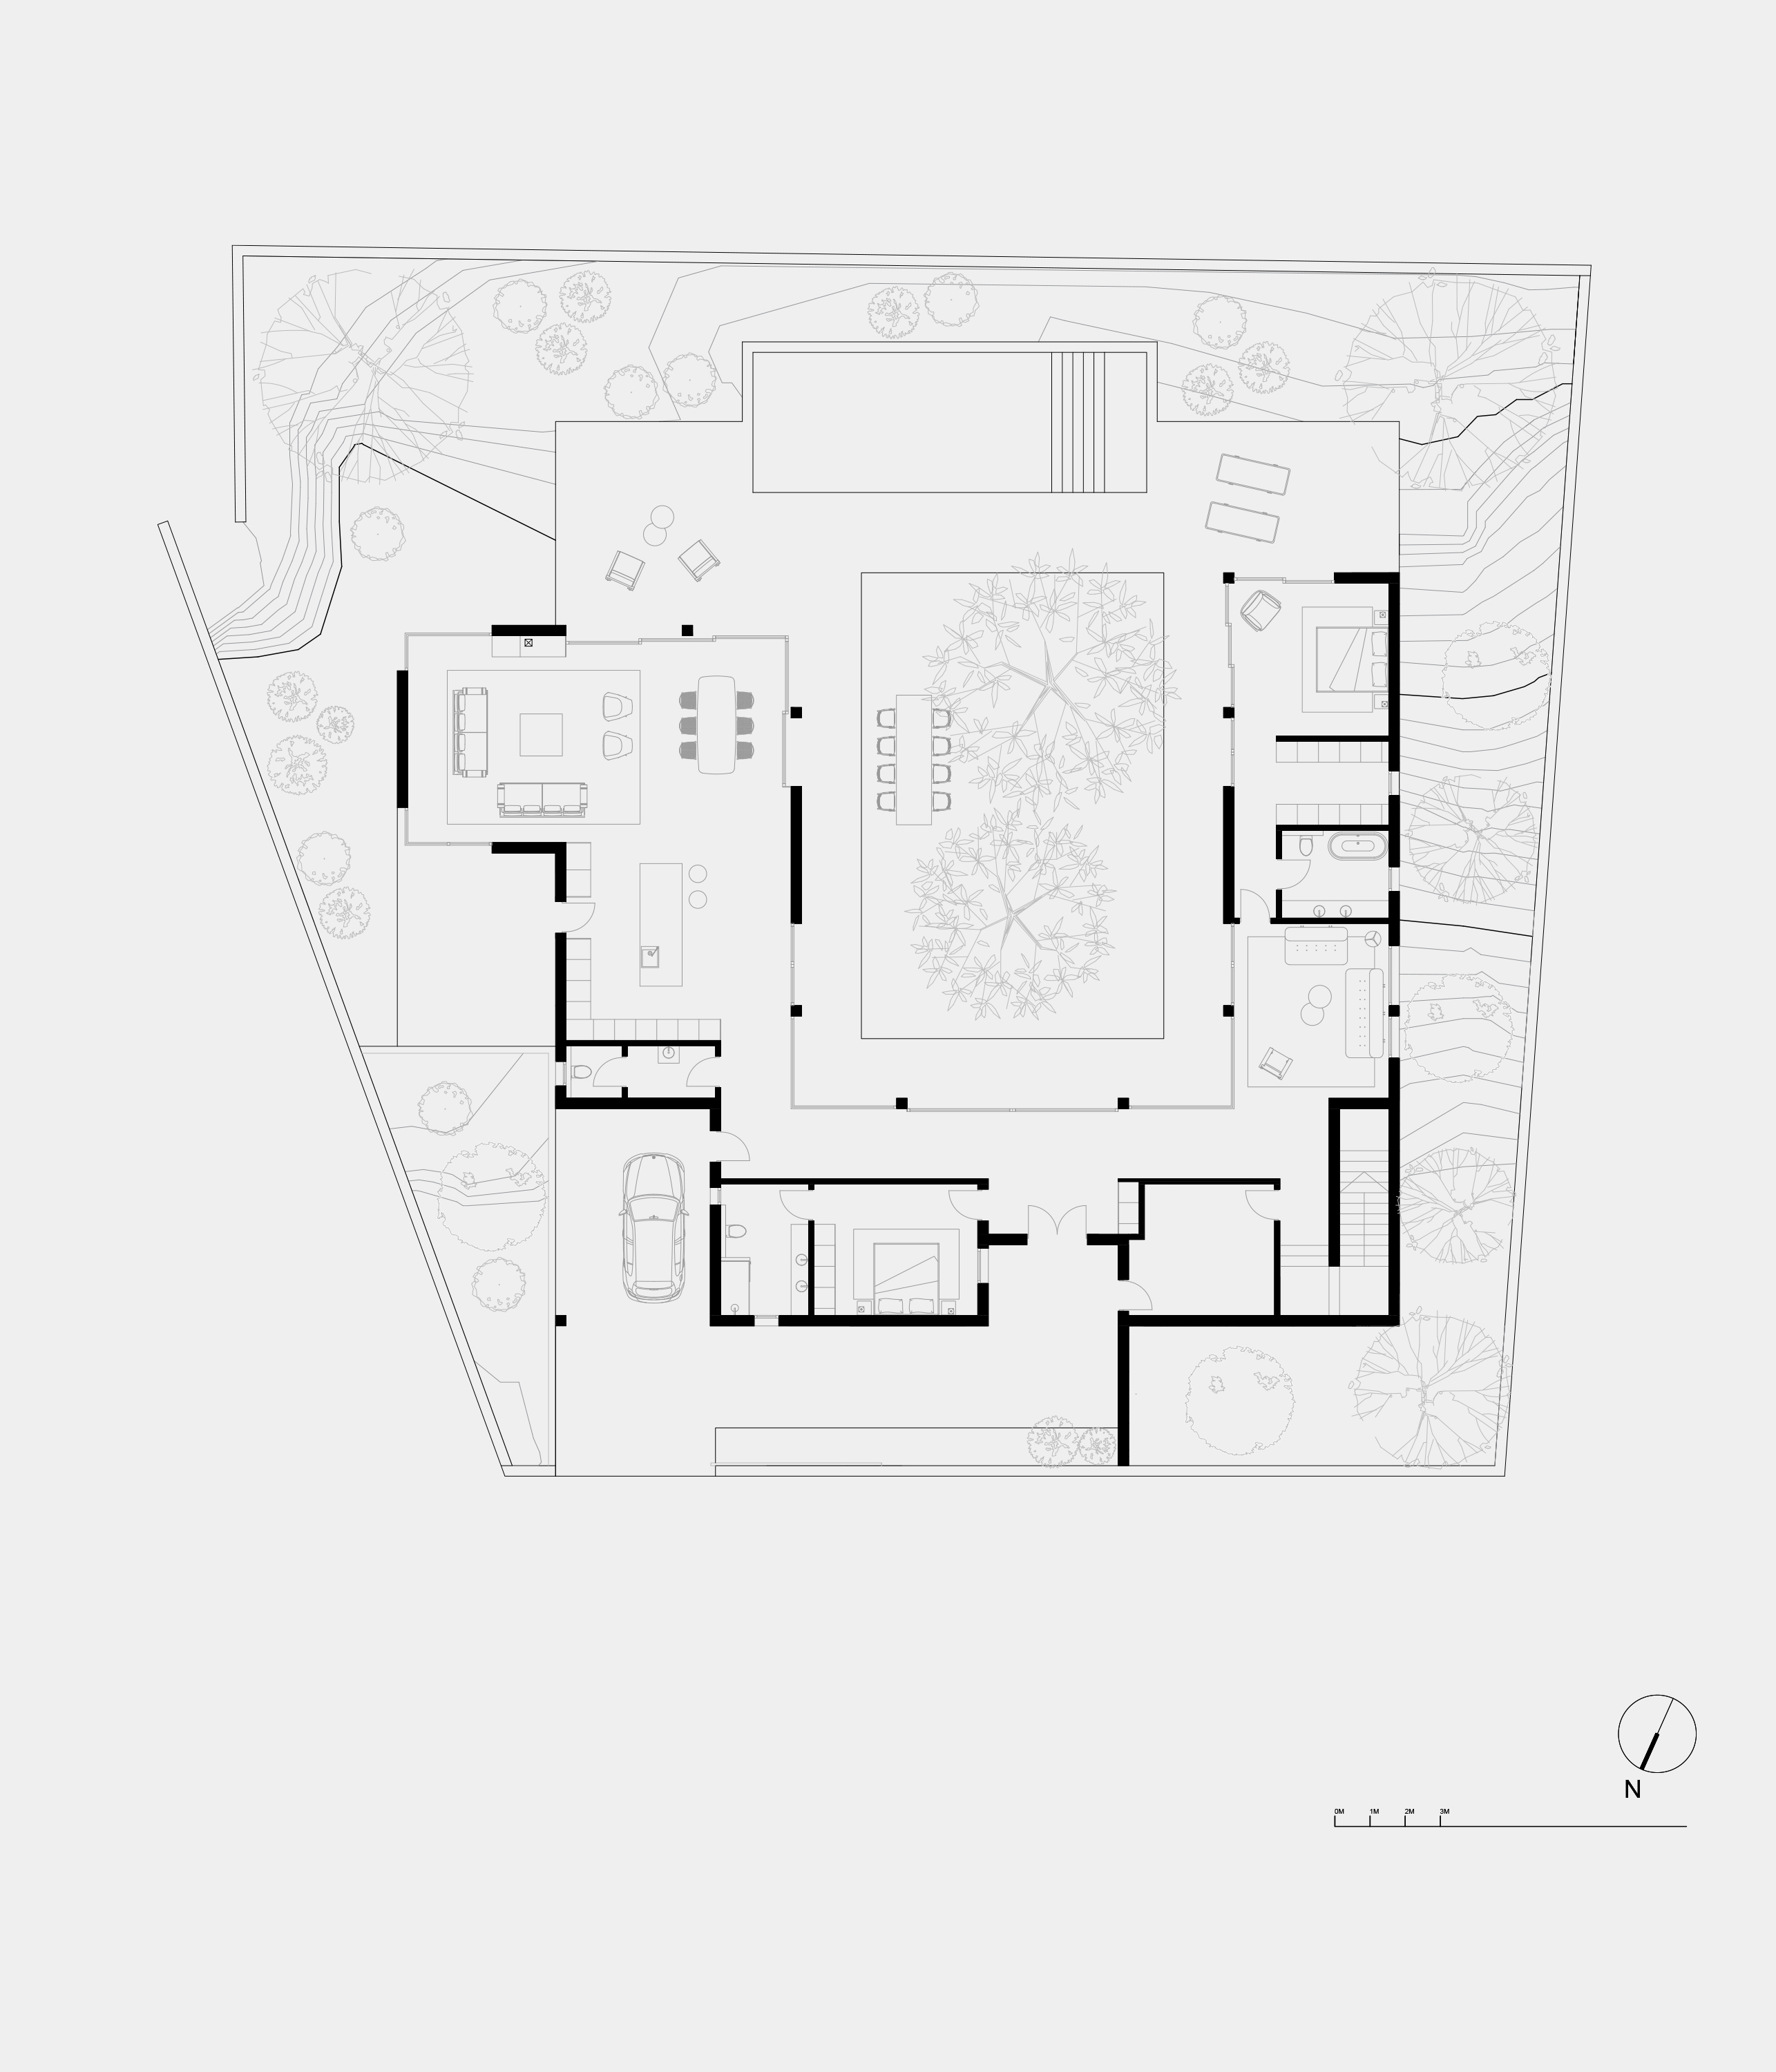 IA2035 - PATIO HOUSE - Ground Floor, Proposed General Arrangment 